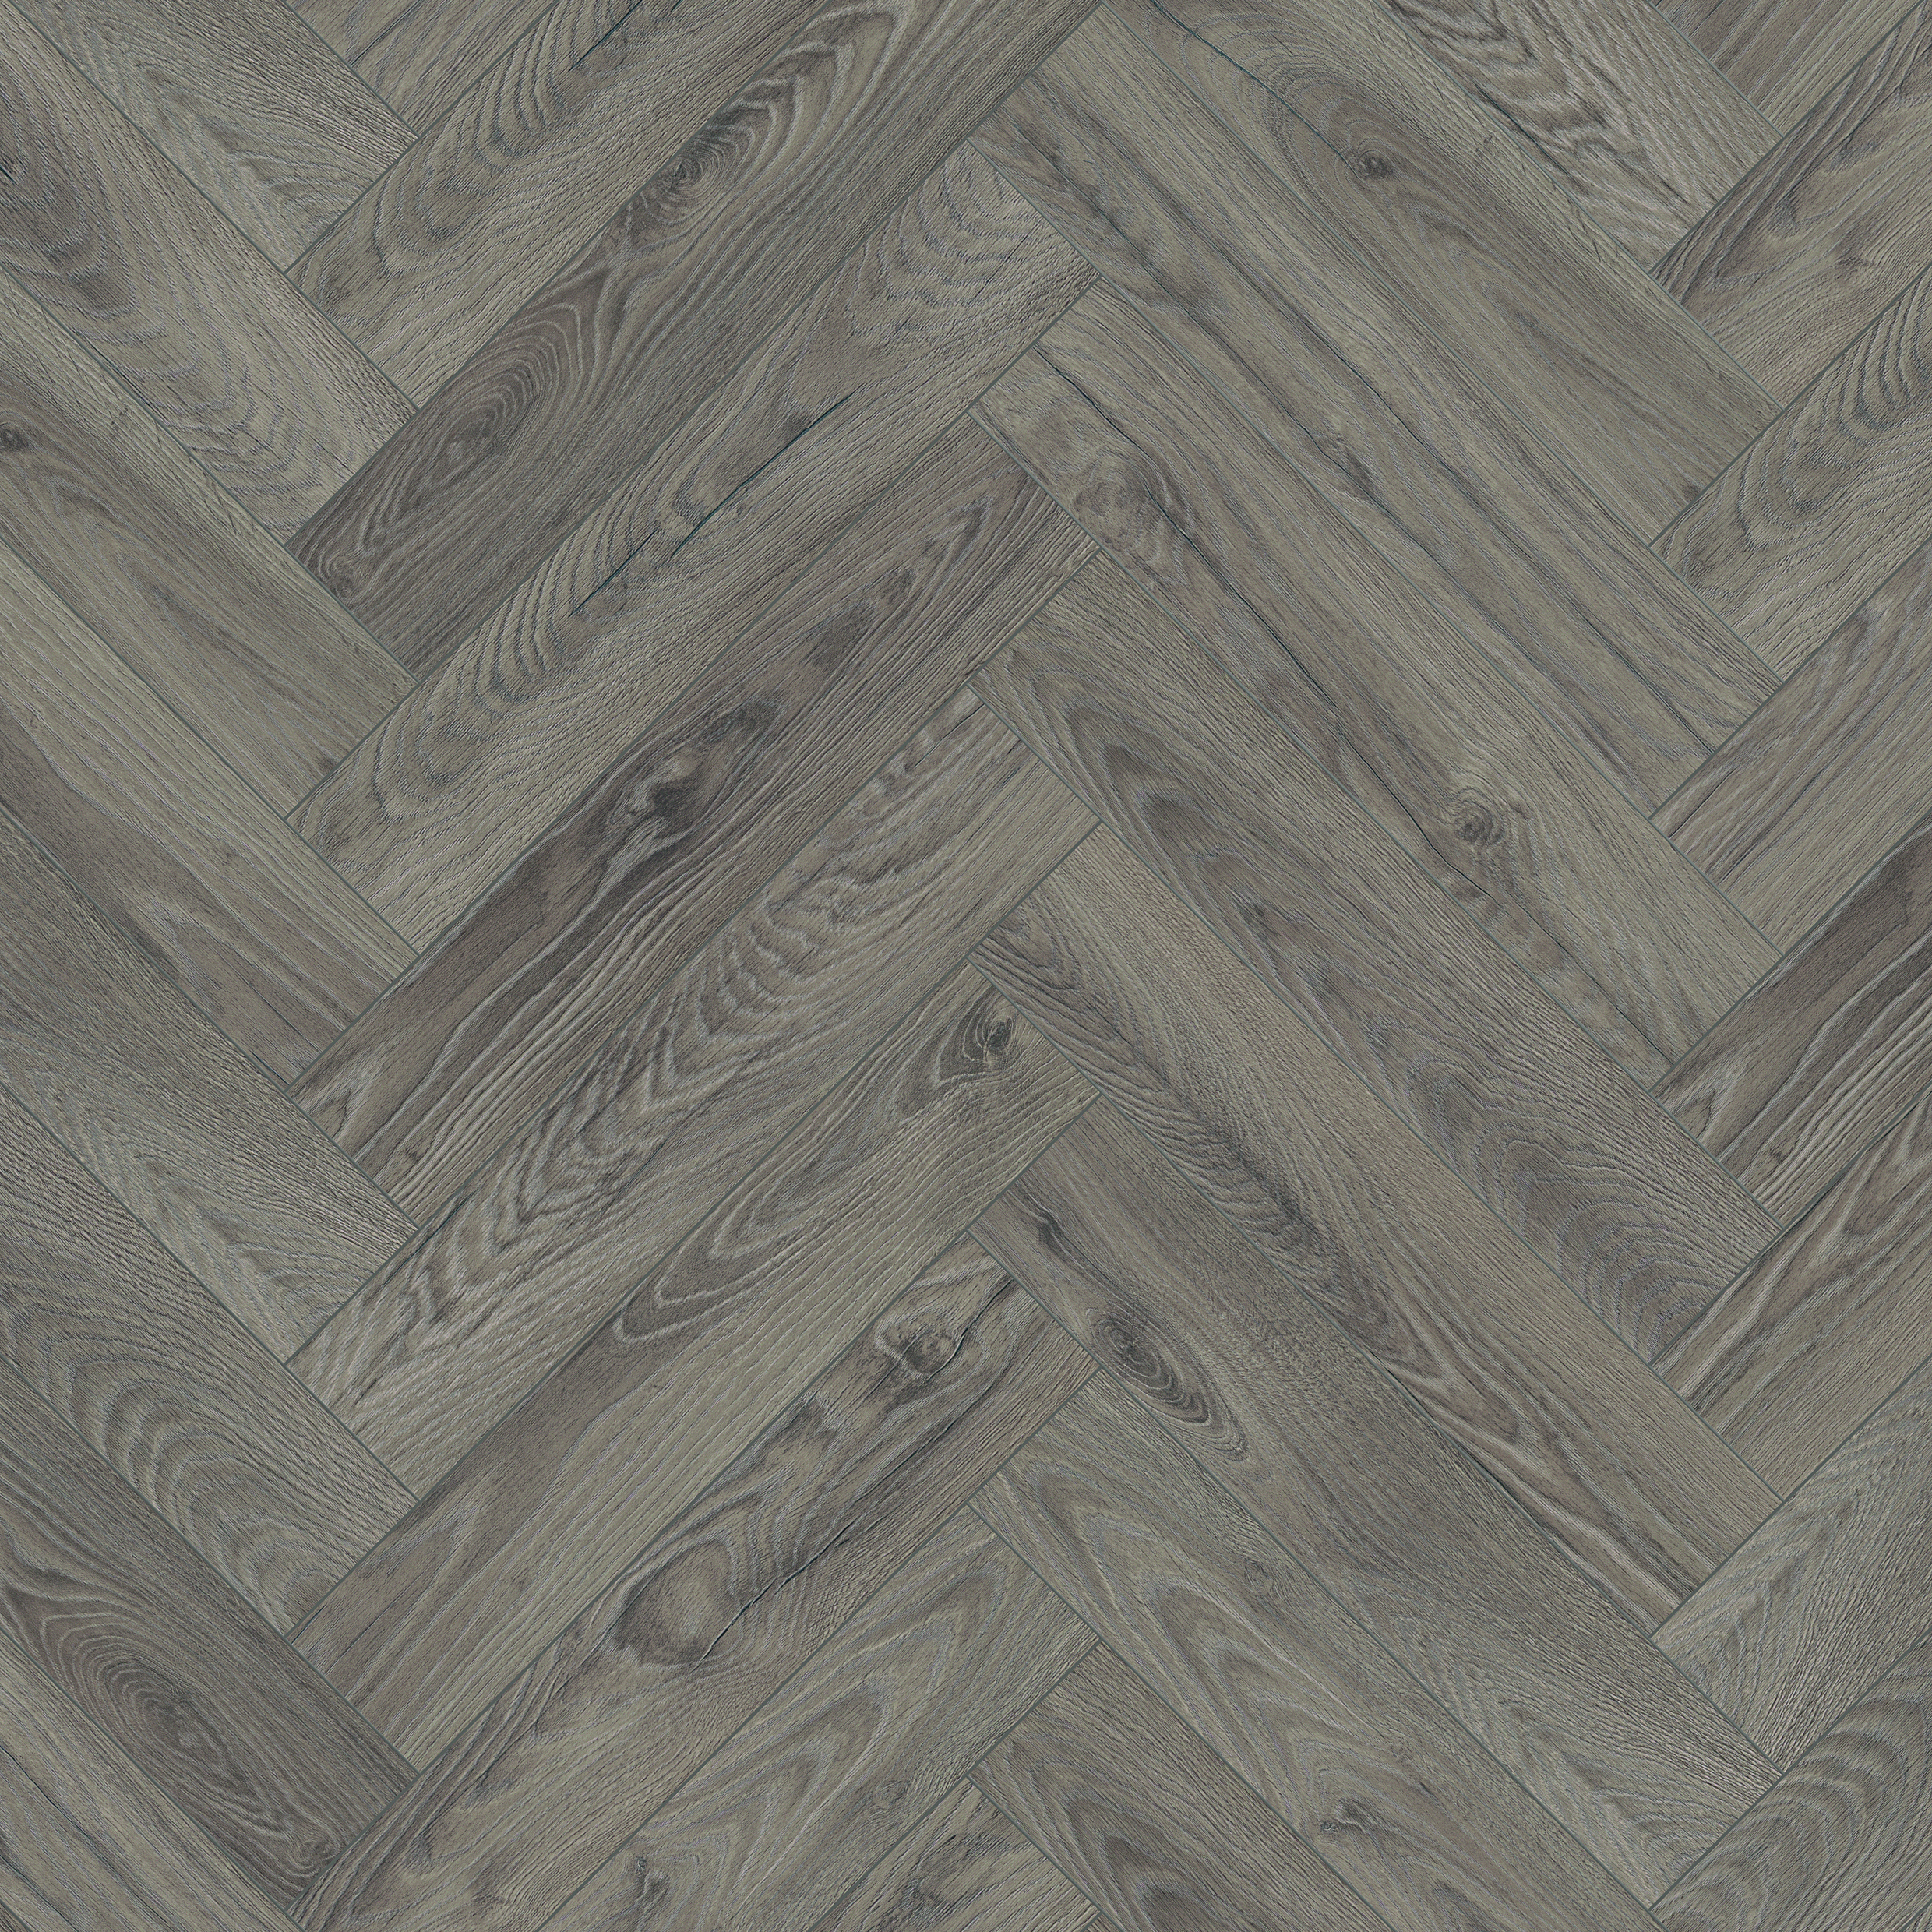 Plumley Grey Oak Herringbone 8mm Laminate Flooring - 0.87m2